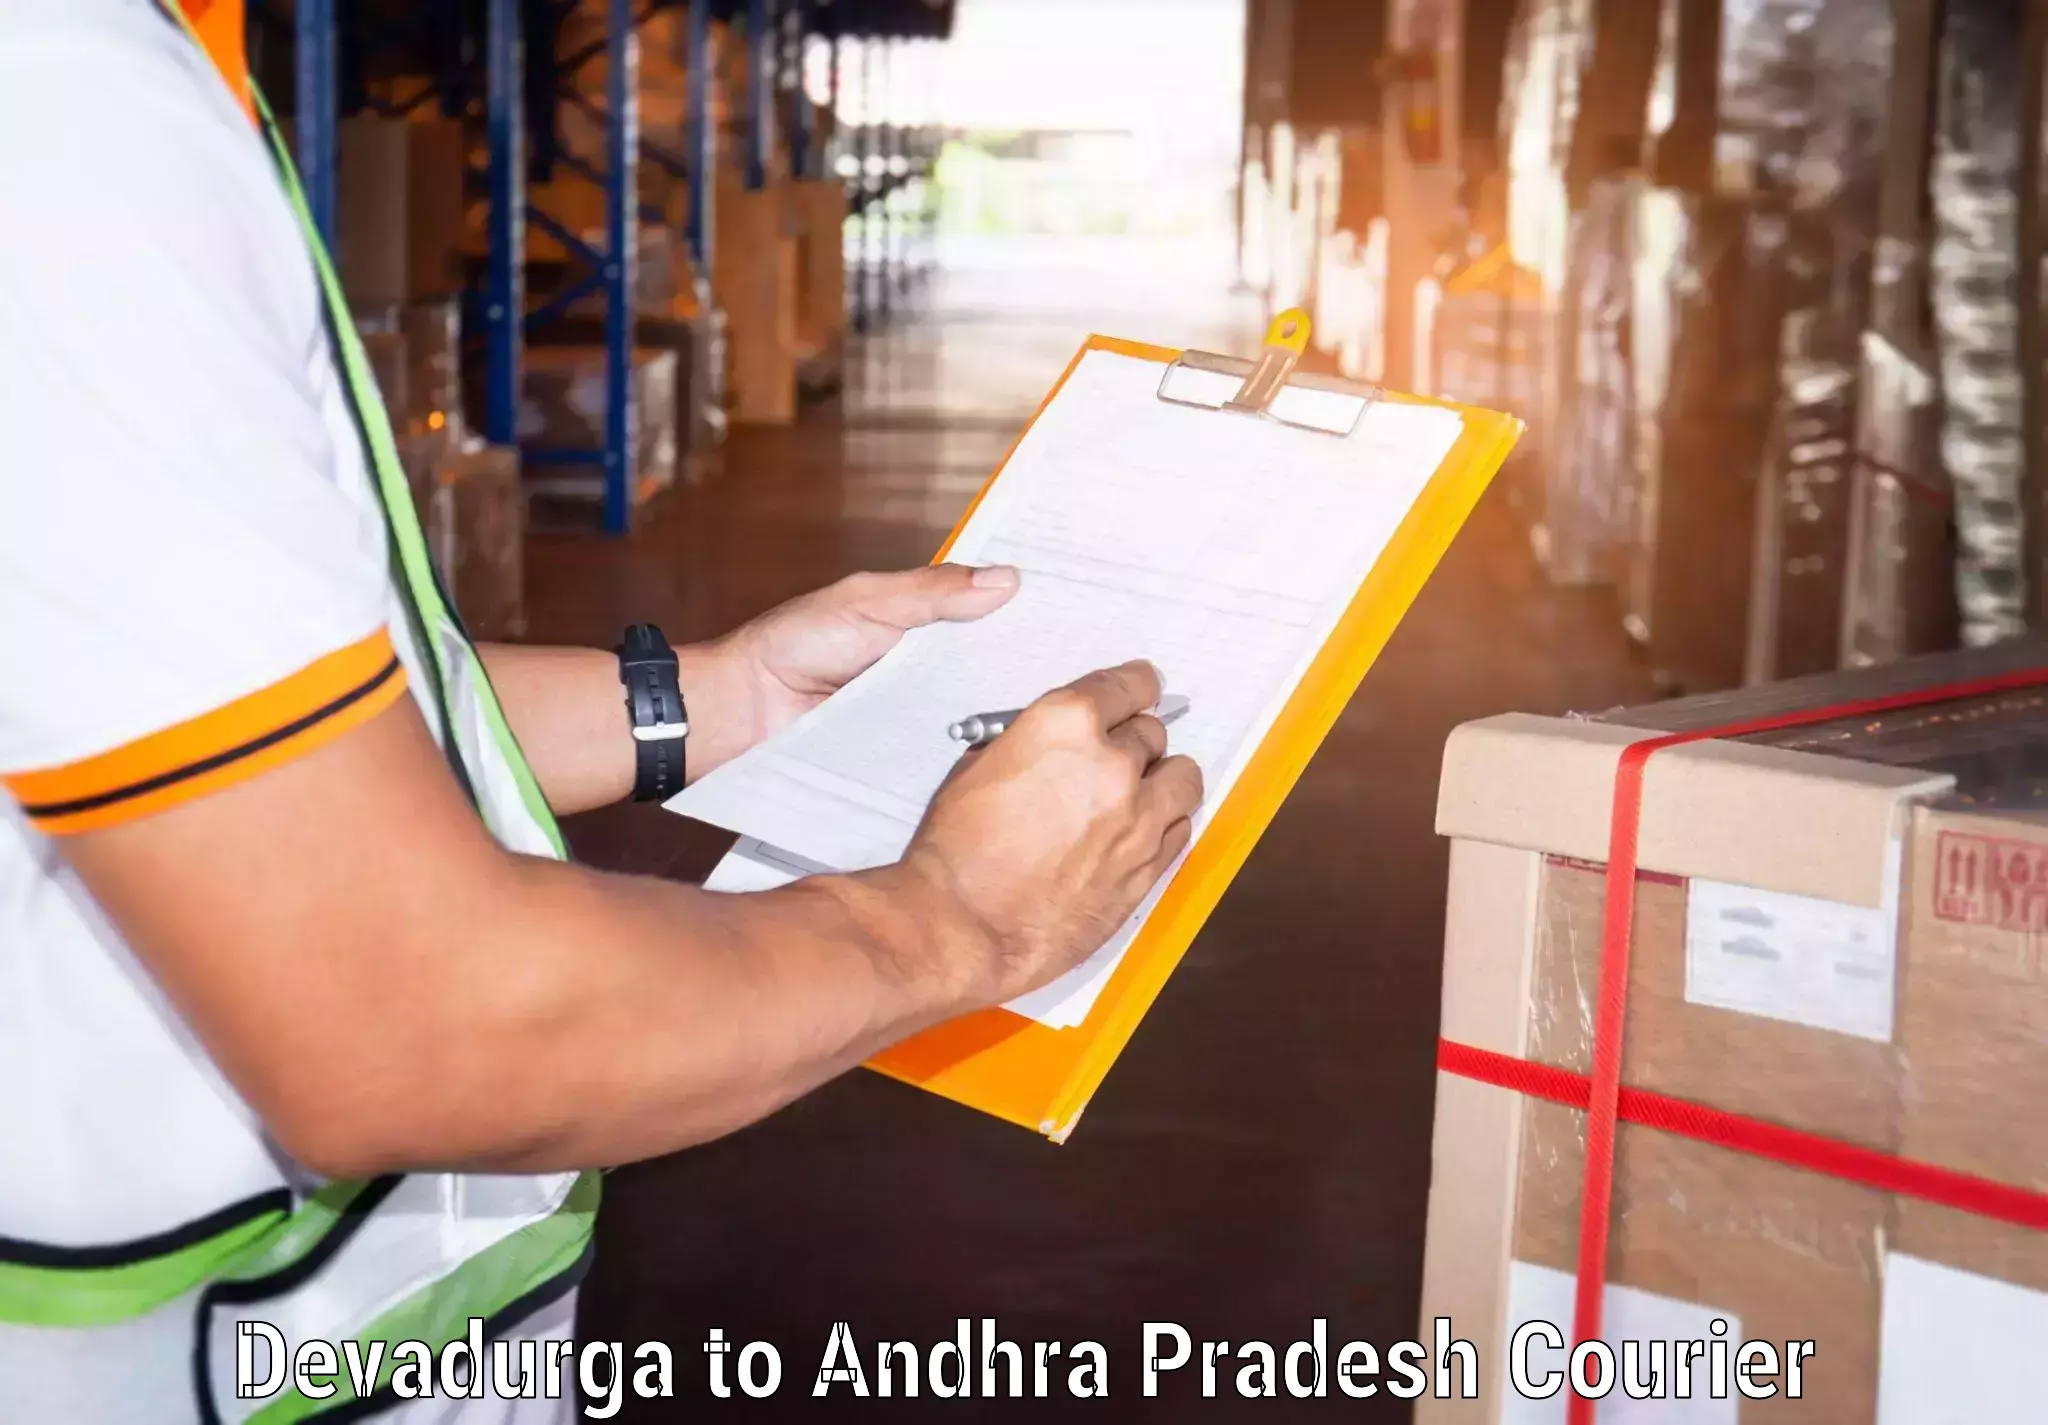 Professional courier handling Devadurga to Chimakurthy